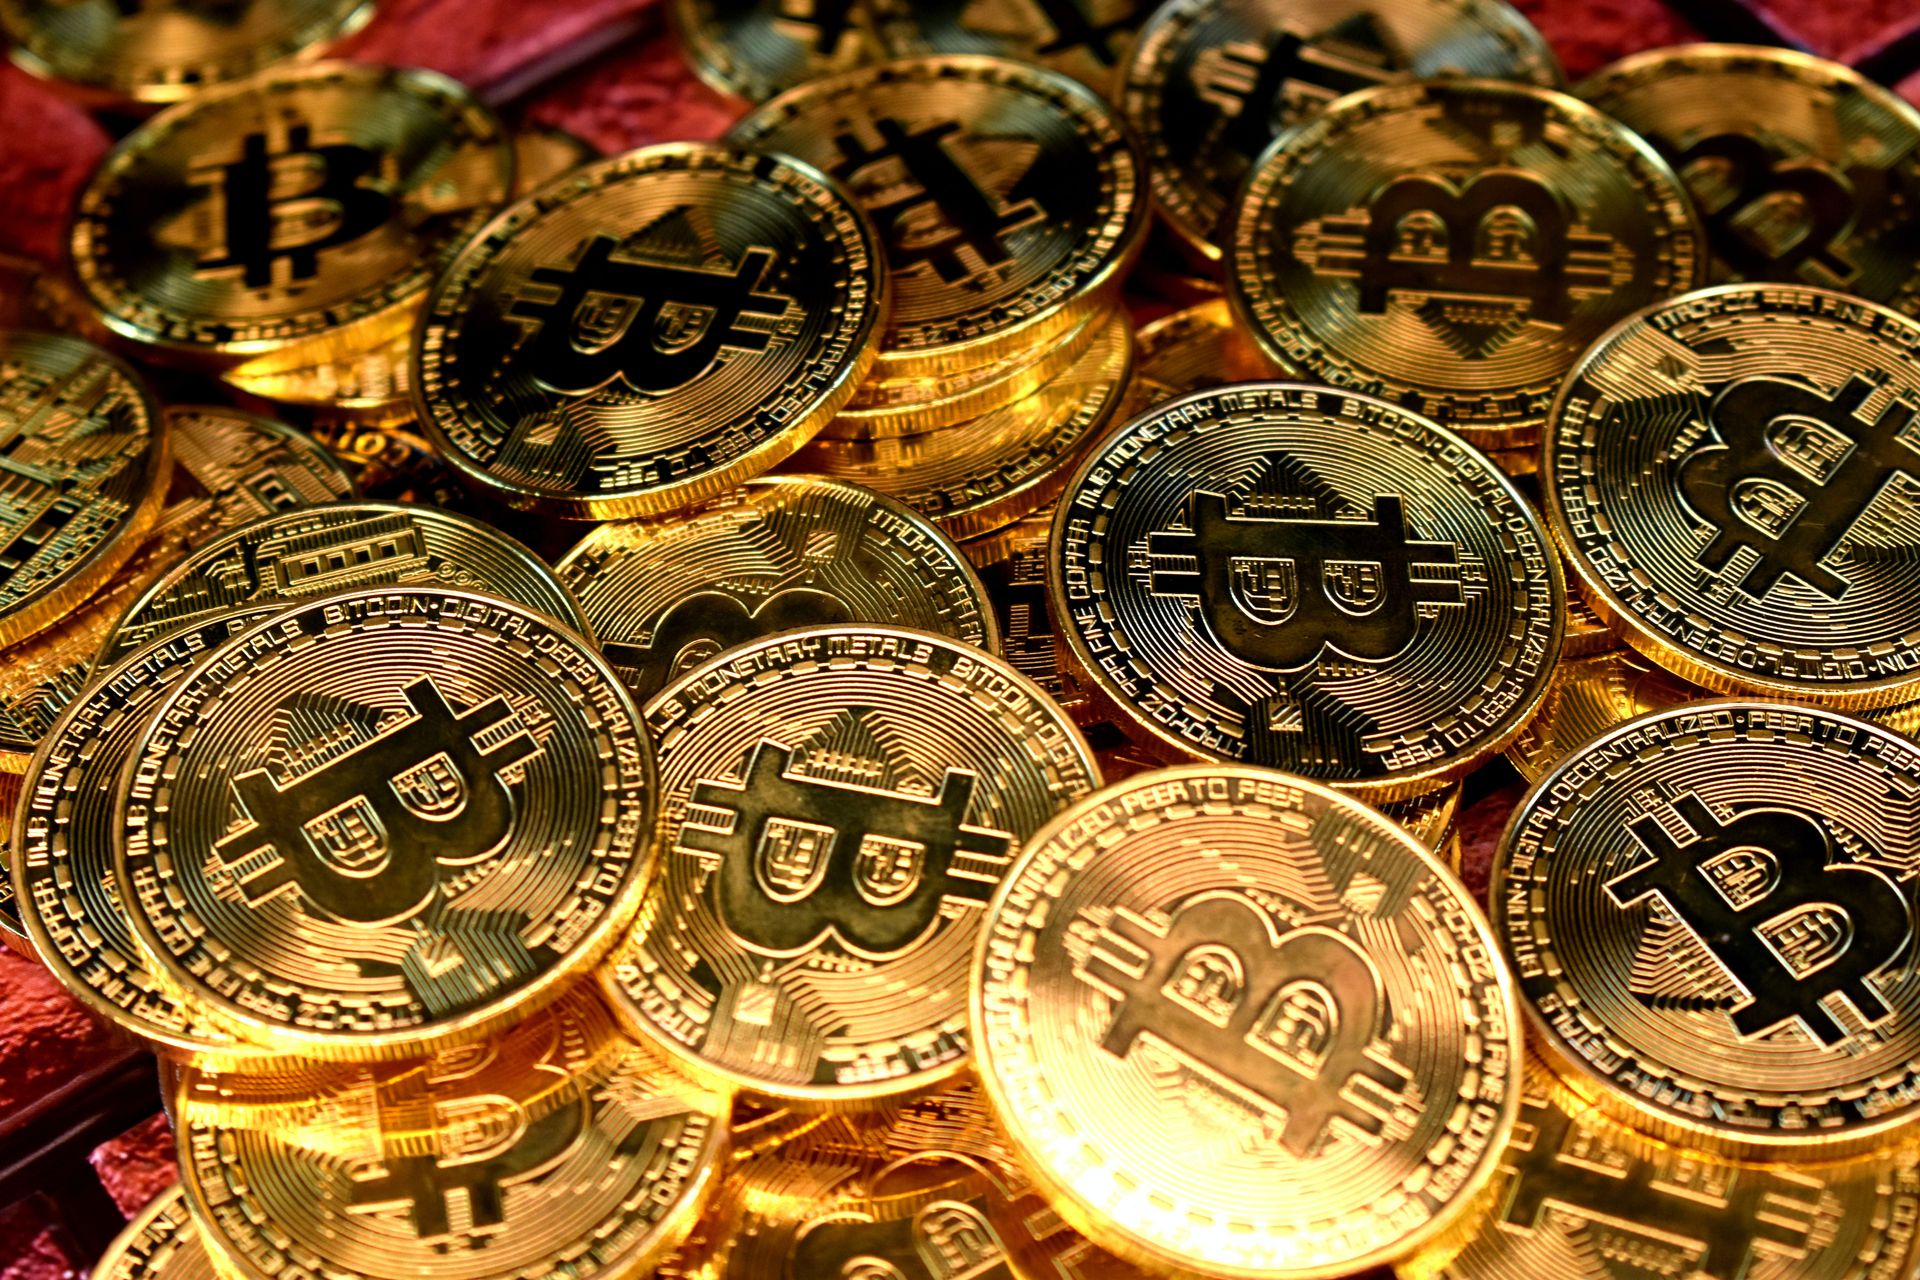 Bitcoin broke the $40,000 price barrier